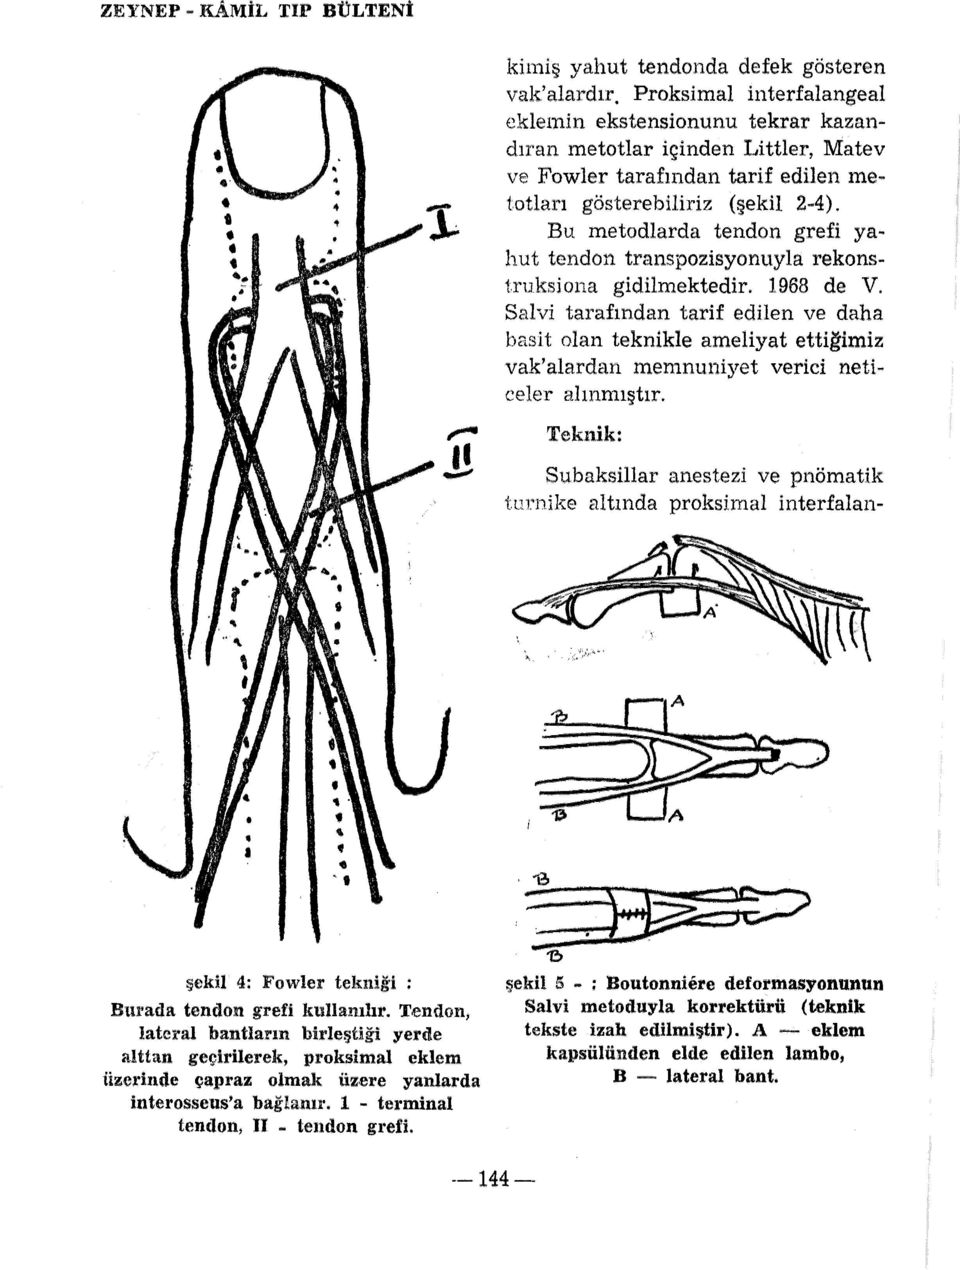 Bu metodlarda tendon grefi yahut te11don transpozisyonuyla rekonstruksiona gidilmektedir. 1968 de V.